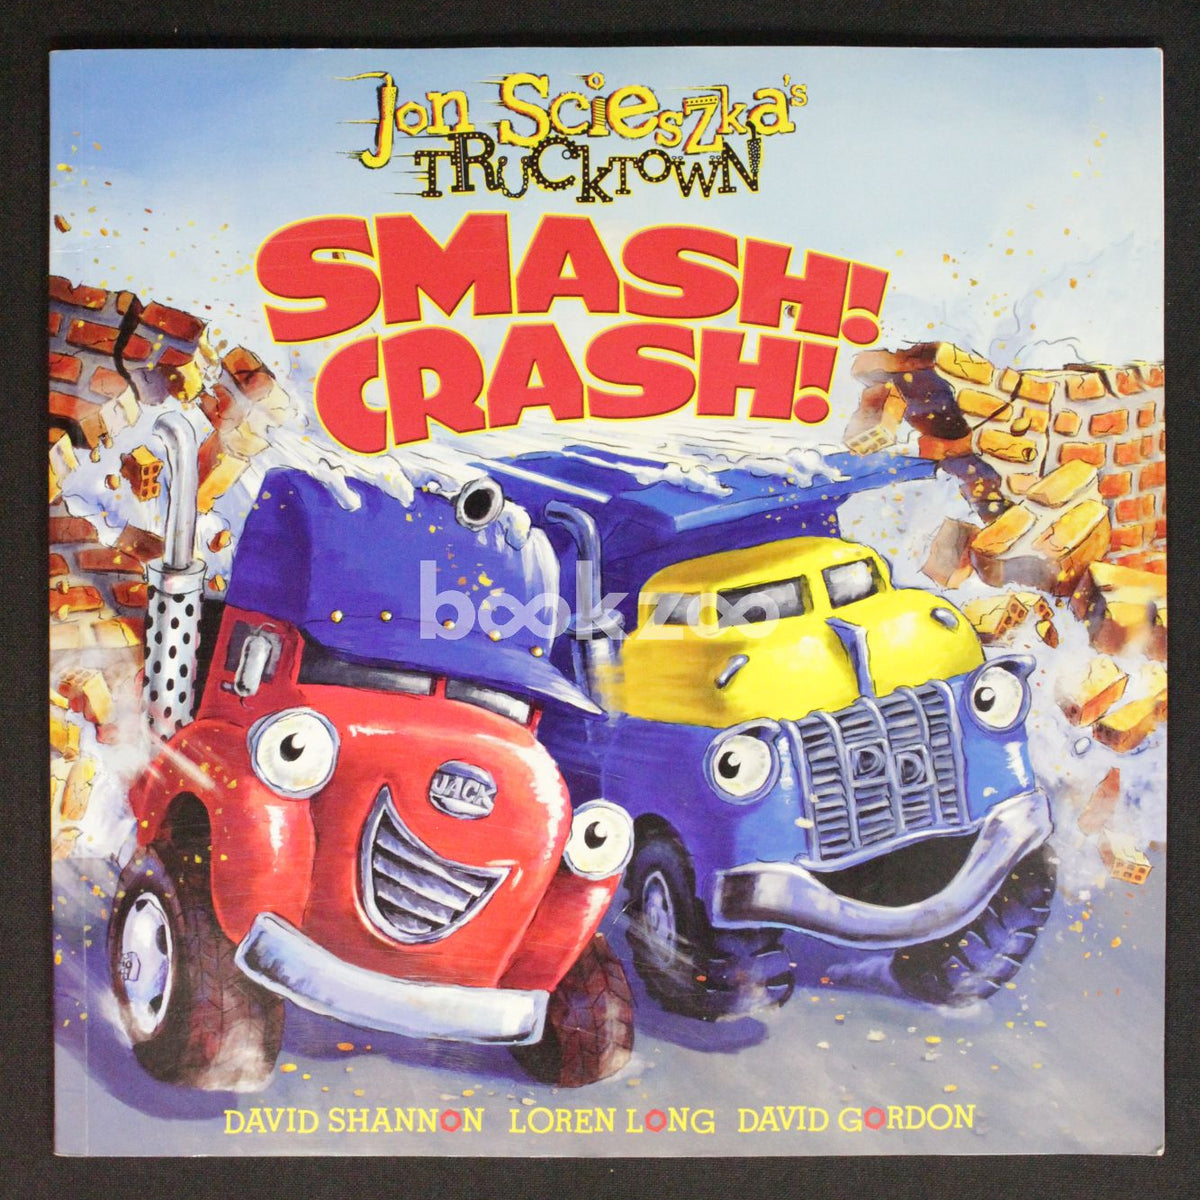 Jon Scieszka's Trucktown: Smash! Crash! Book Review